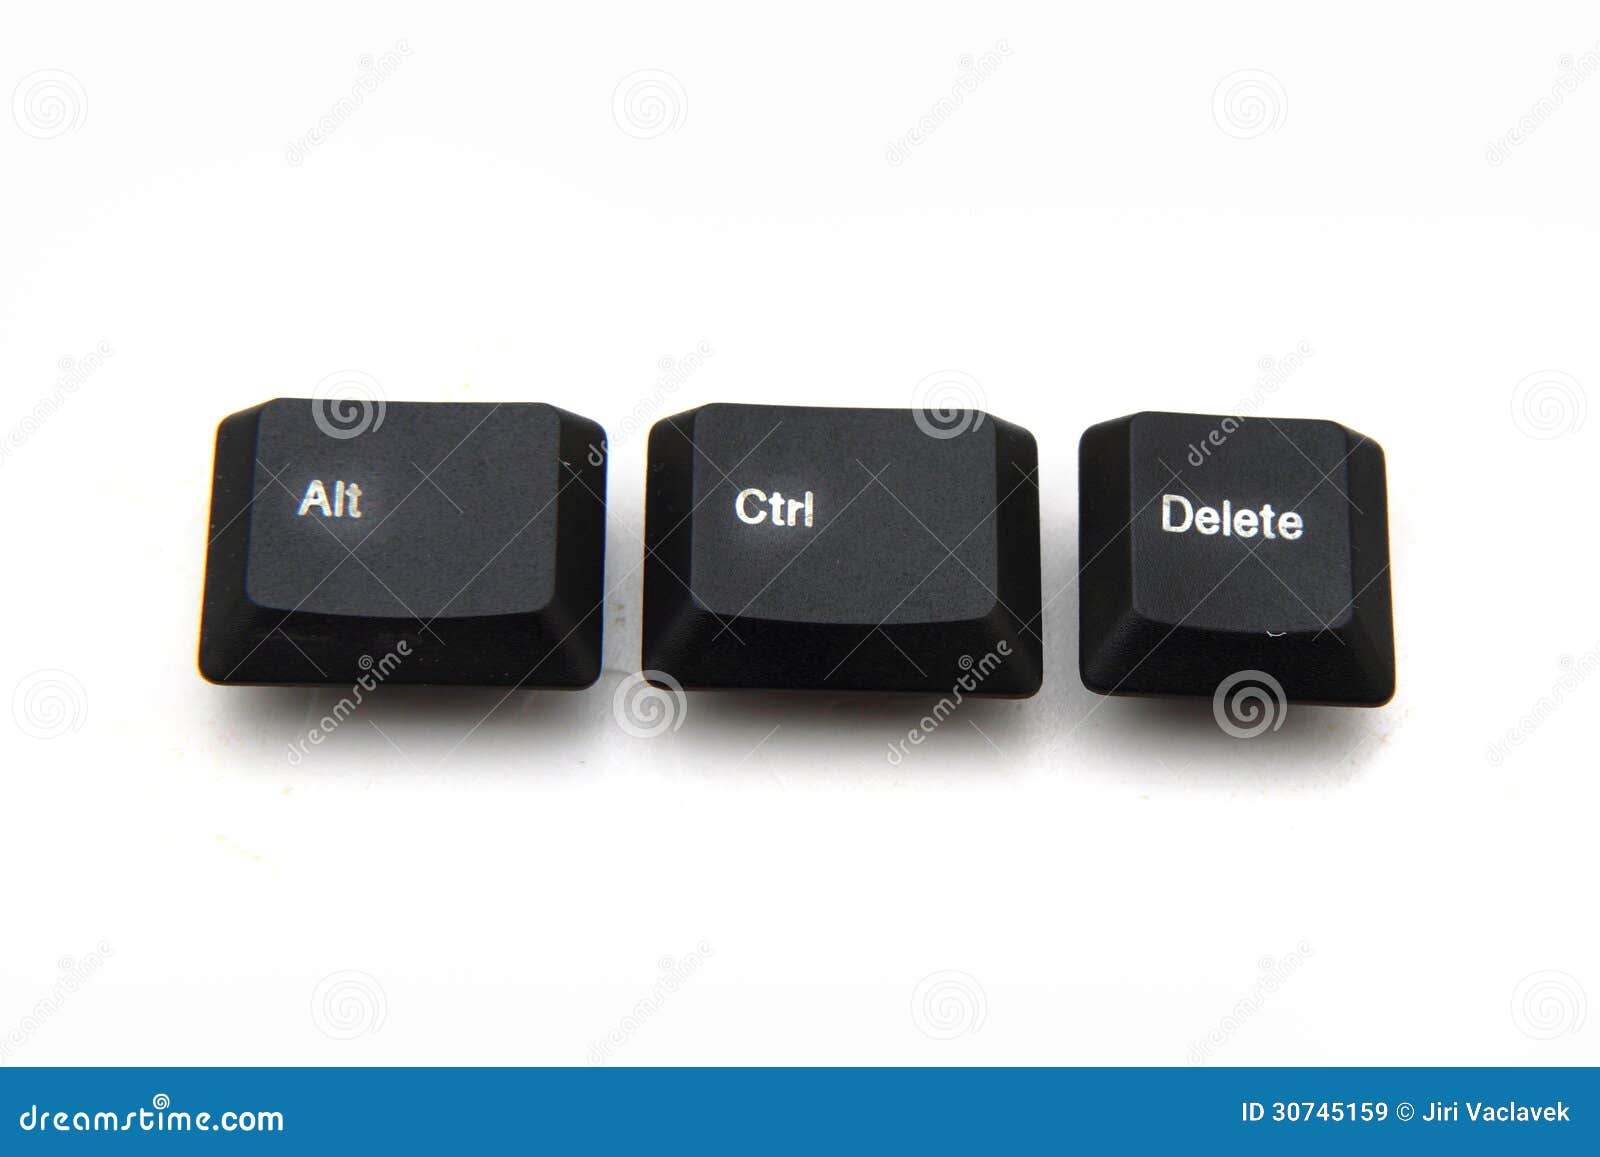 keyboard keys - ctrl, alt, del